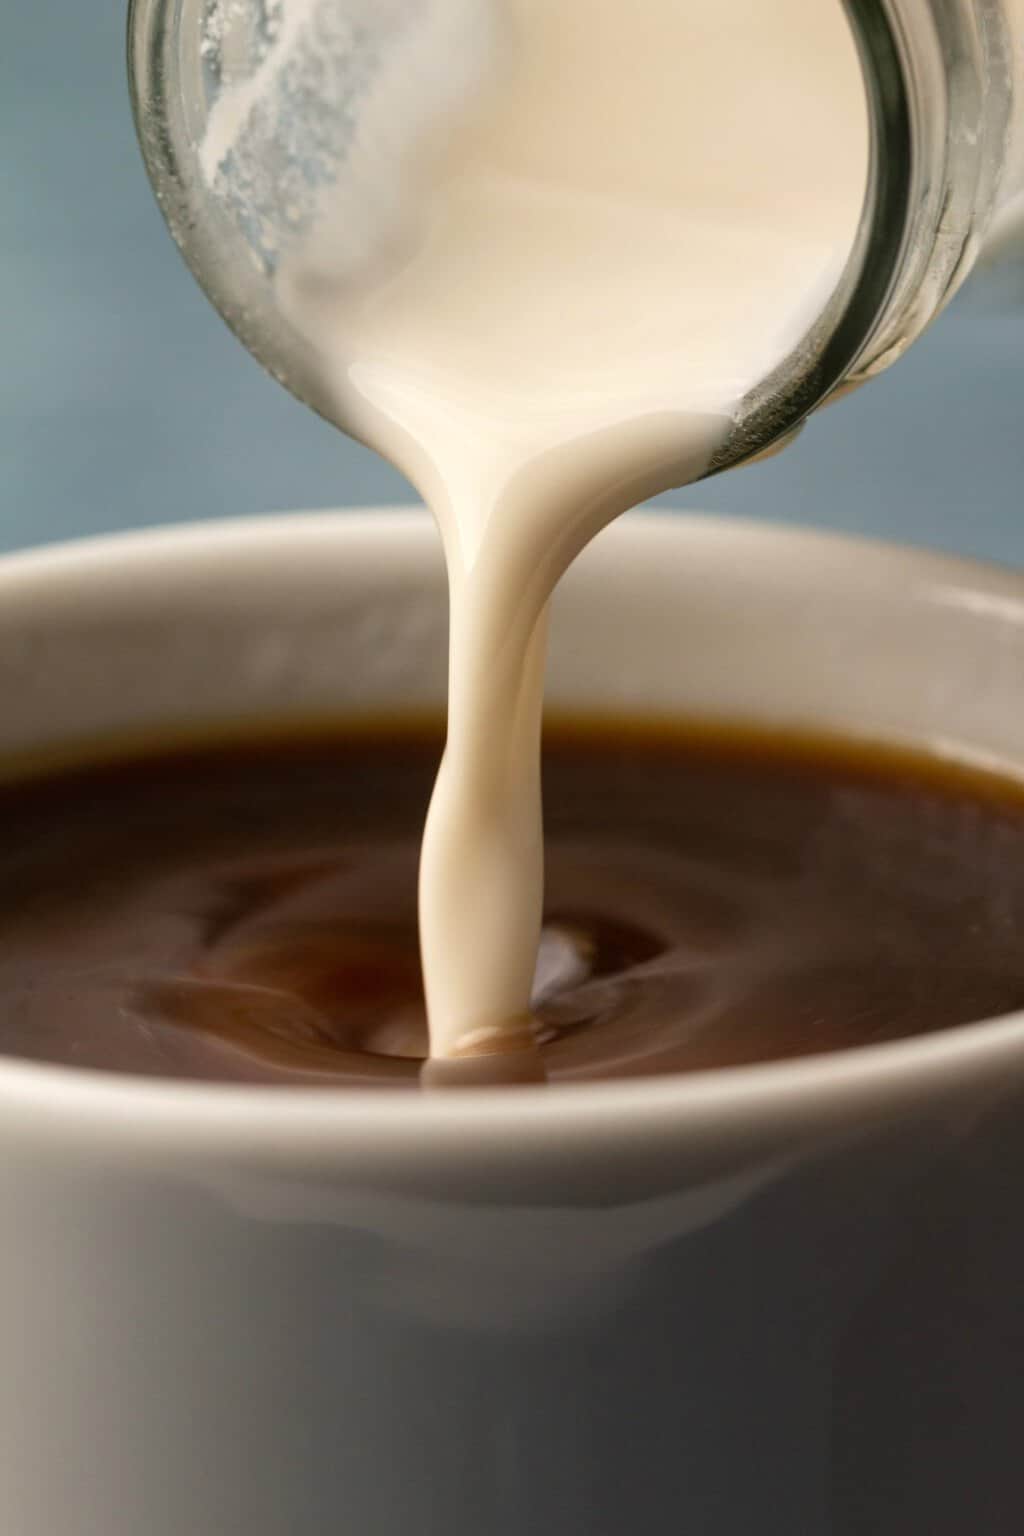 Cashew milk pouring into coffee. 